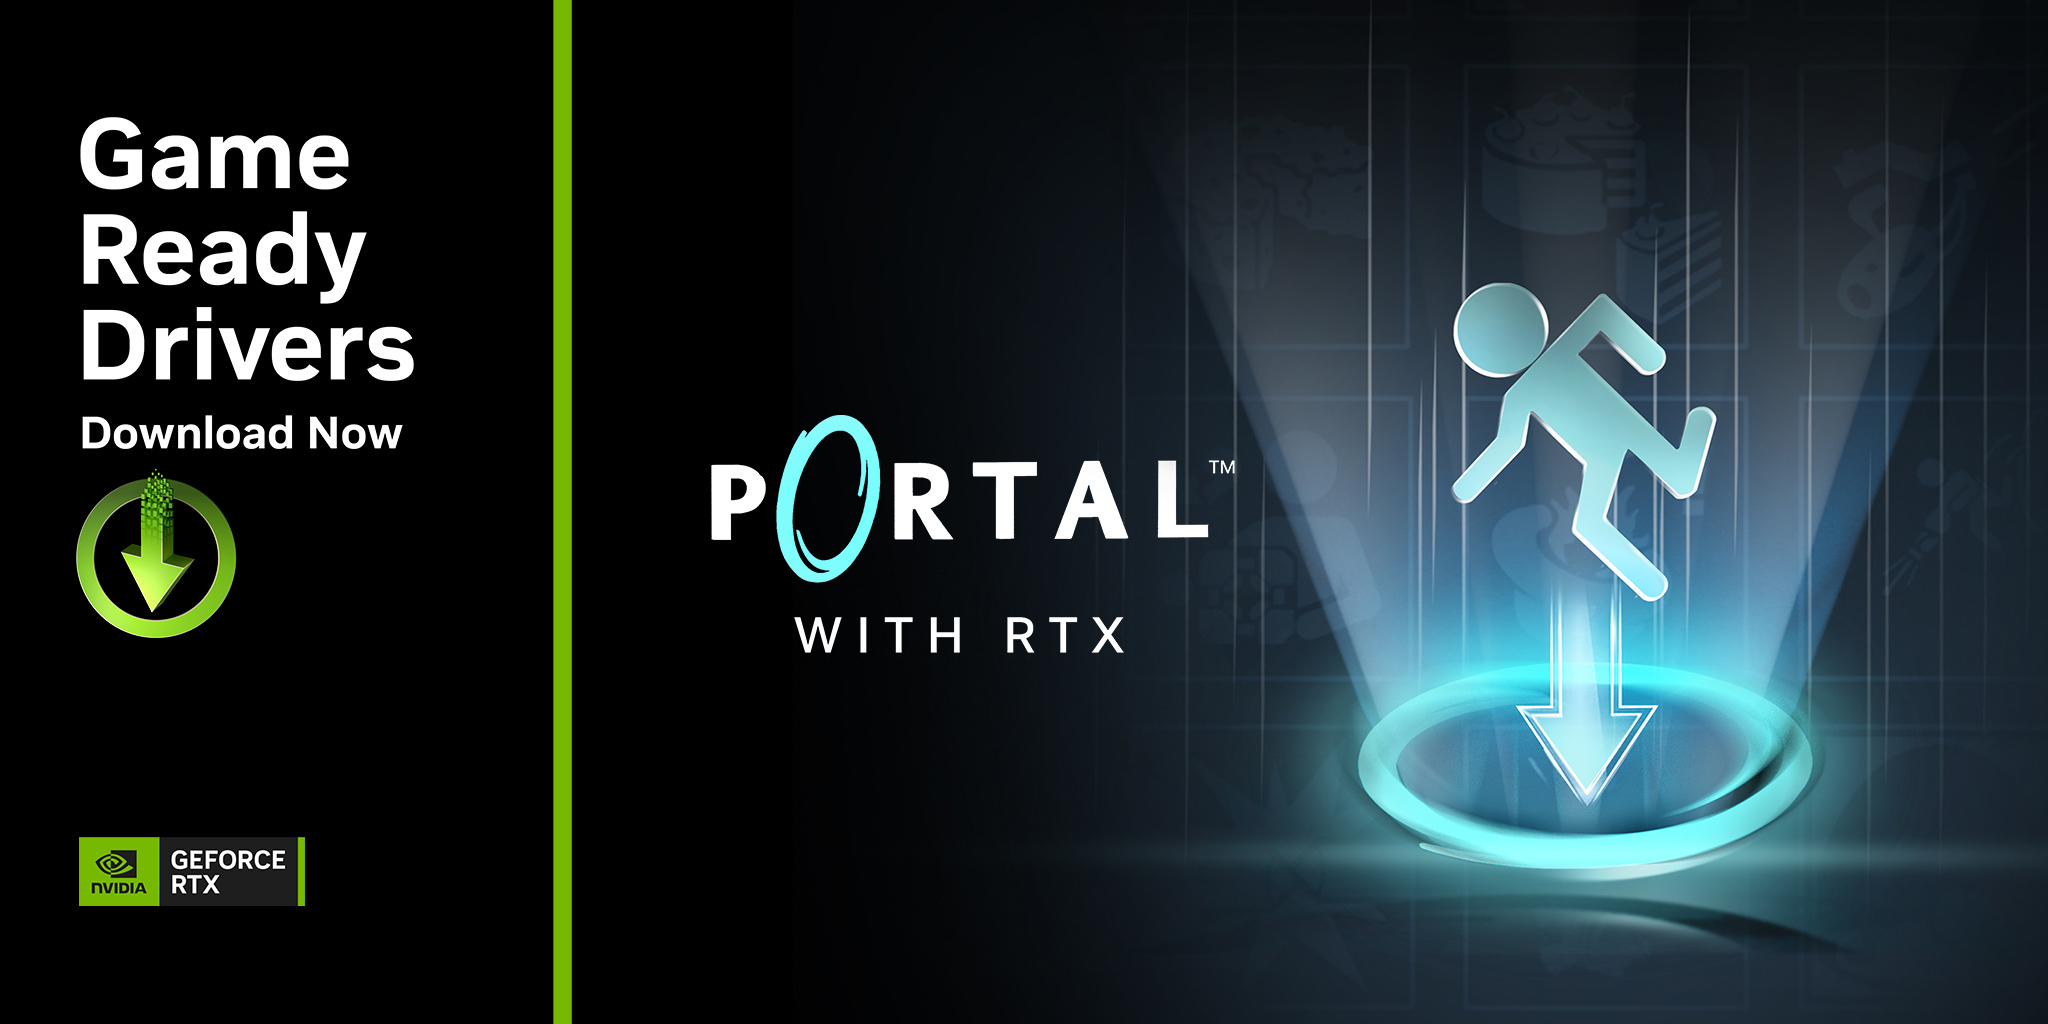 GRD---Portal-with-RTX.jpg